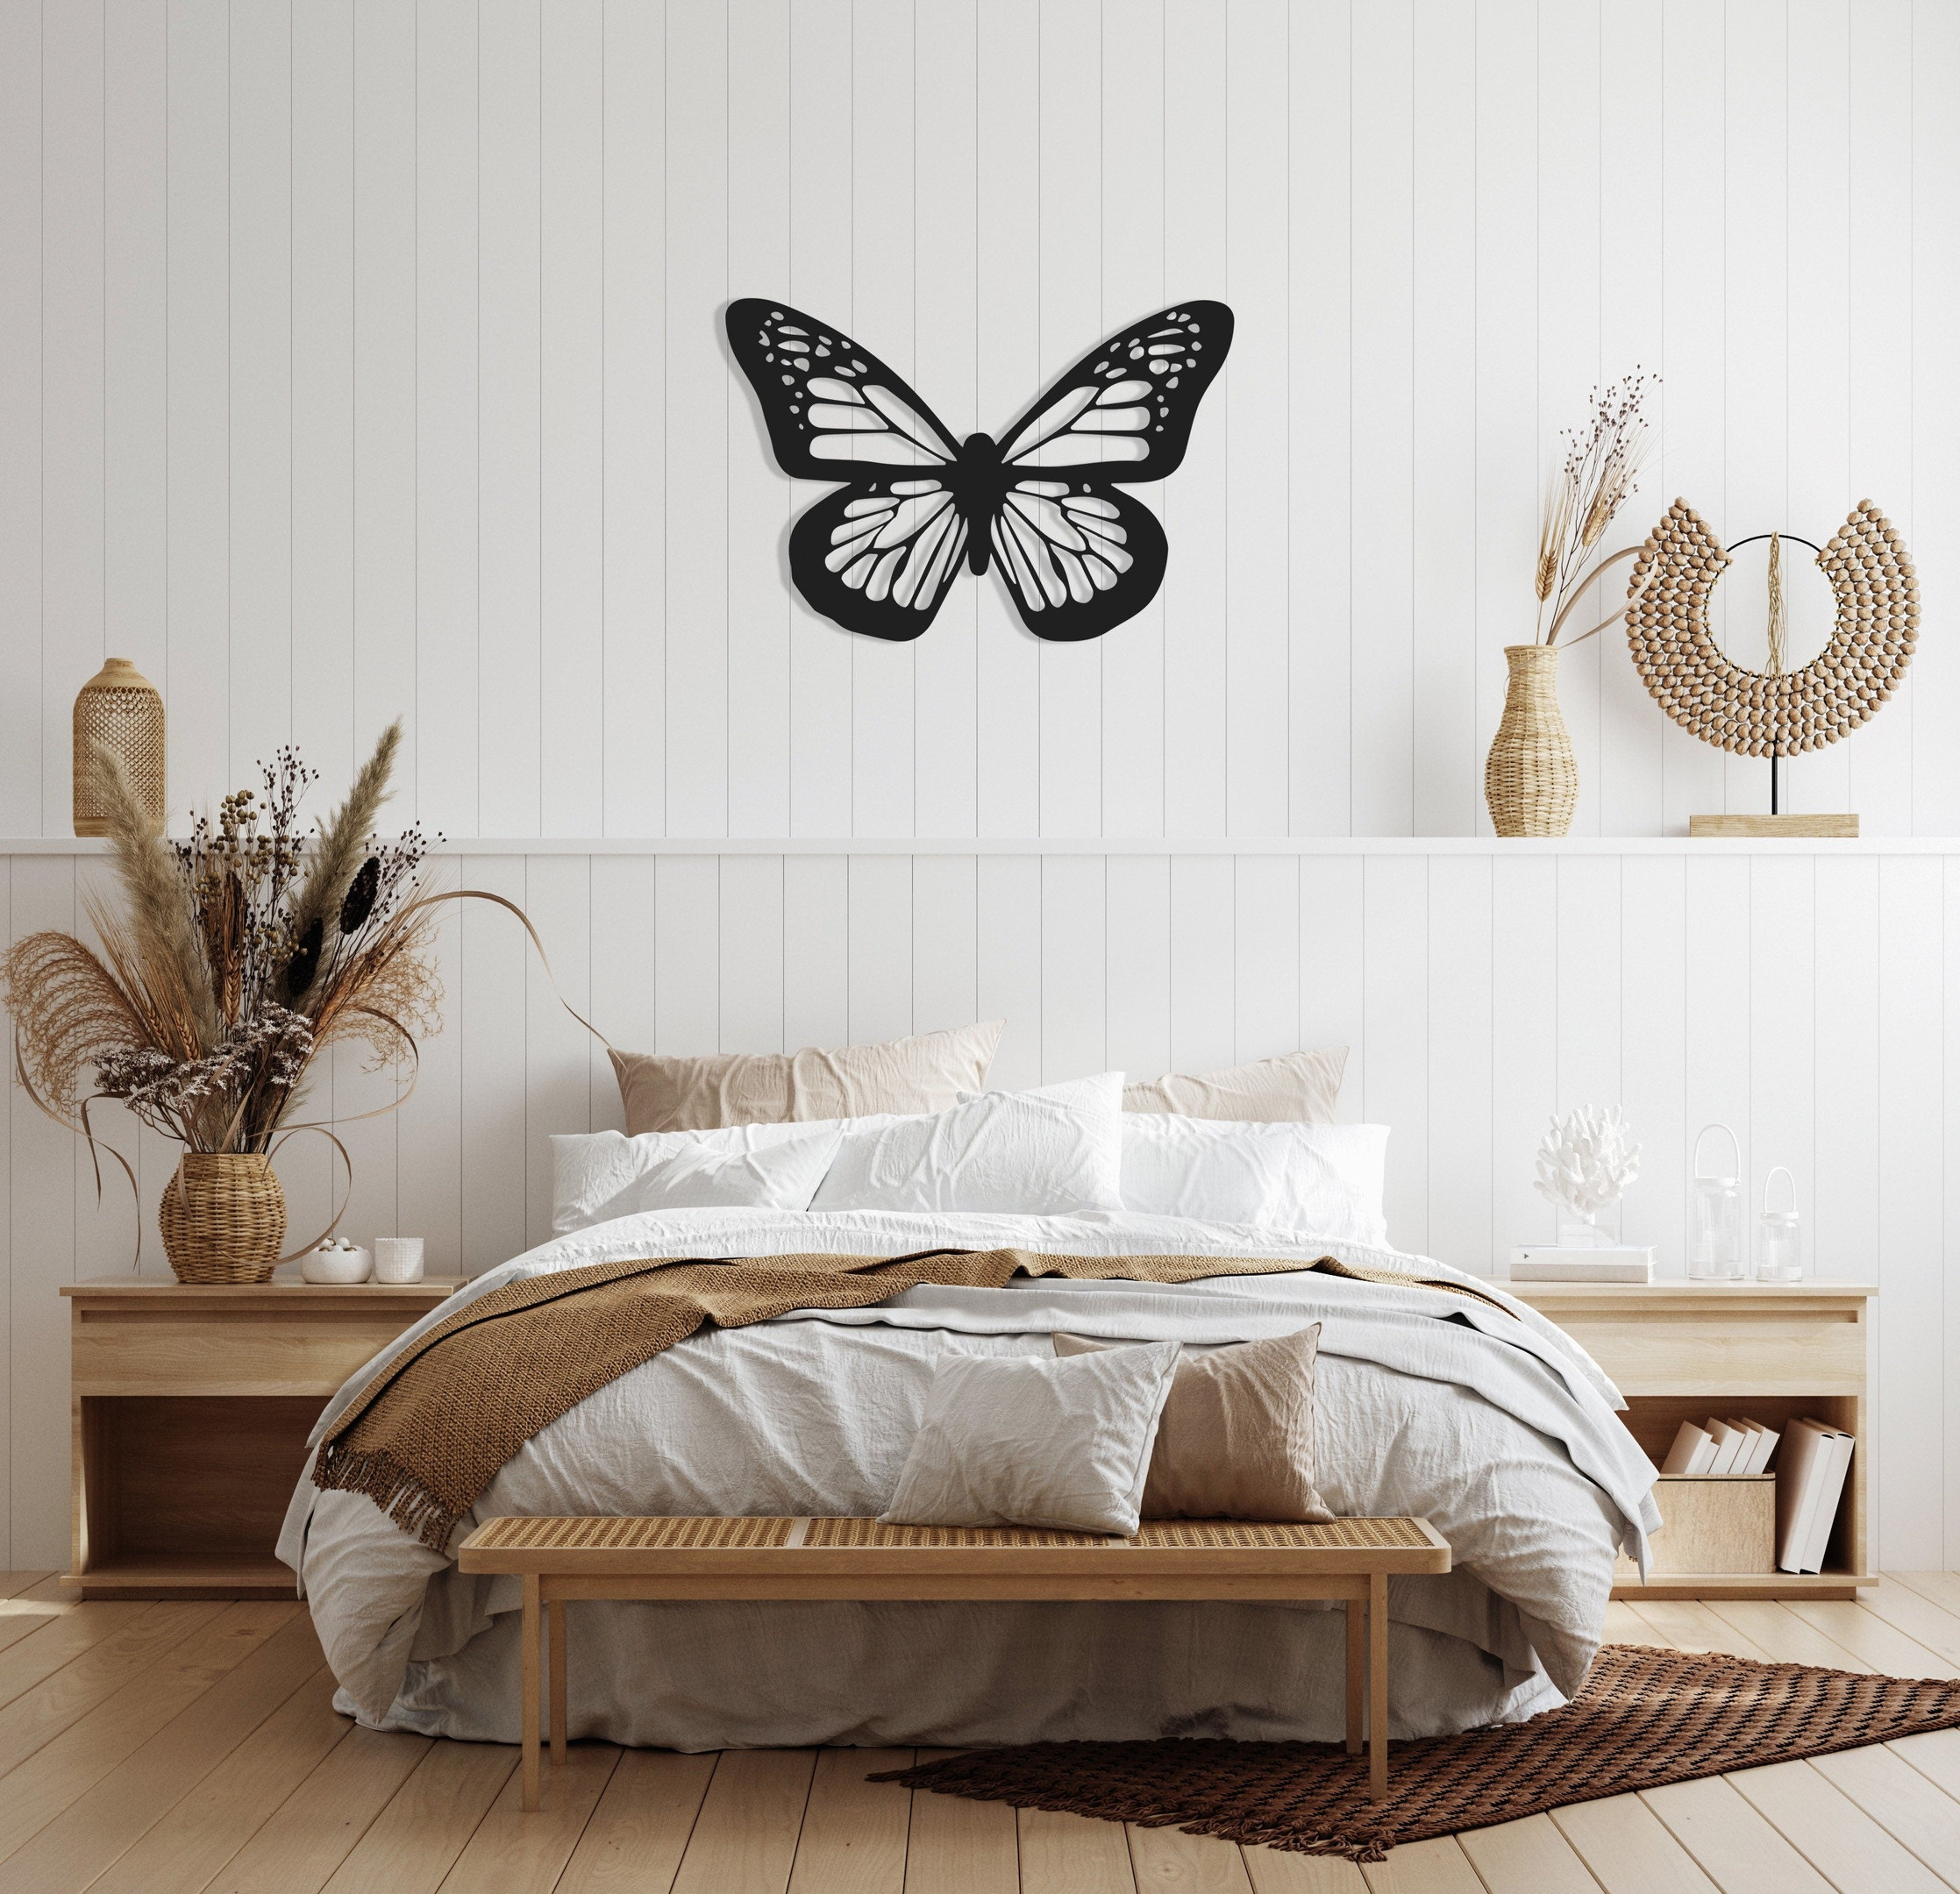 Butterfly Metal Wall Art, Butterfly Wings Wall Decor, Housewarming Gift, Office Wall Decor, Living Room Decor, Animal Art, Metal Laser Cut Metal Signs Custom Gift Ideas 14x14IN